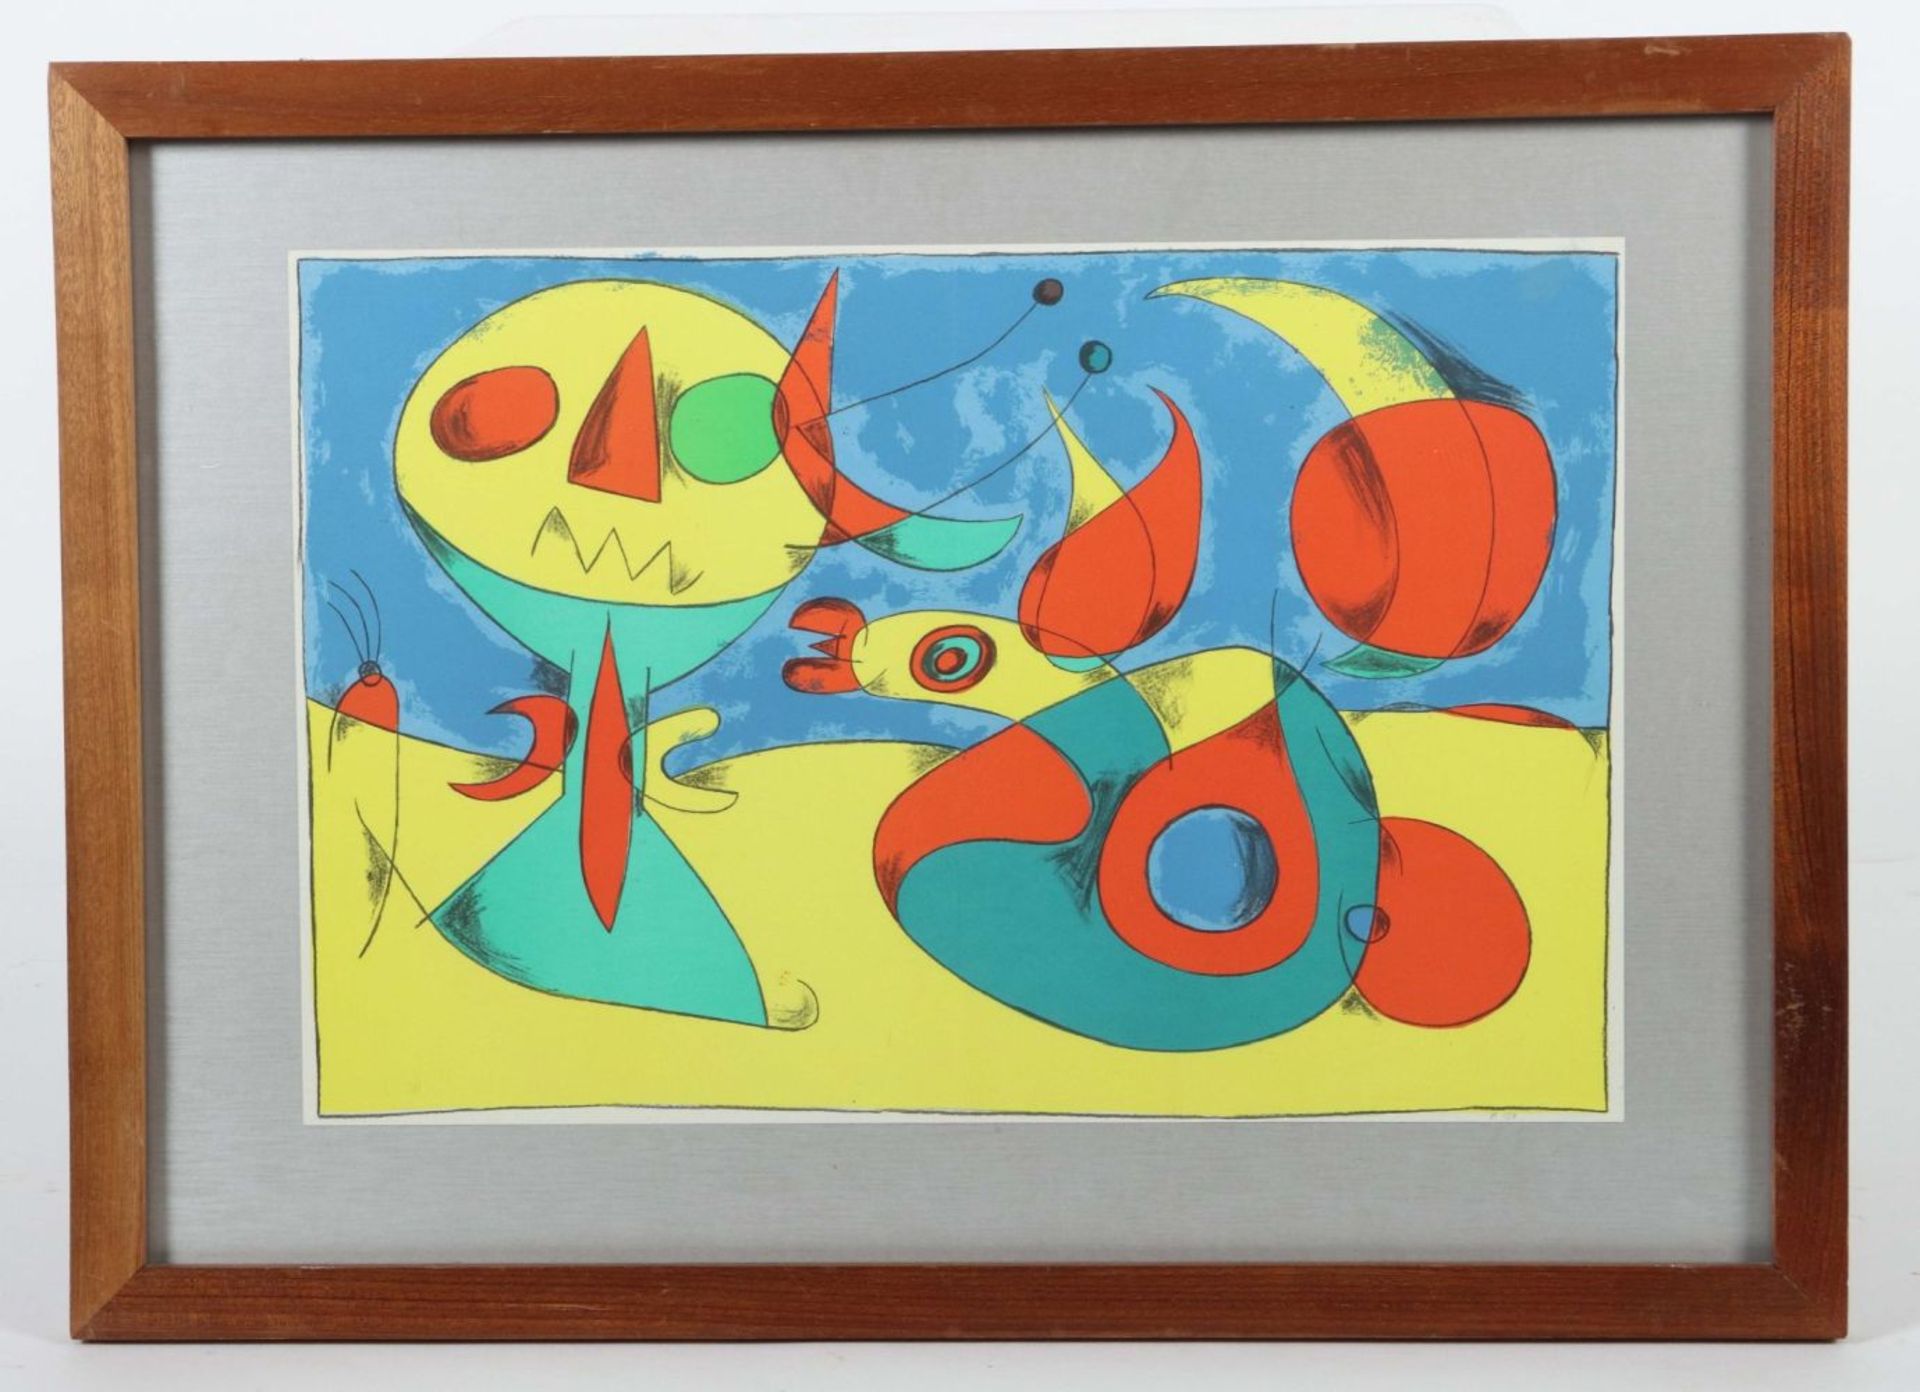 Miró, Joan Barcelona 1893 - 1983 - Image 2 of 3